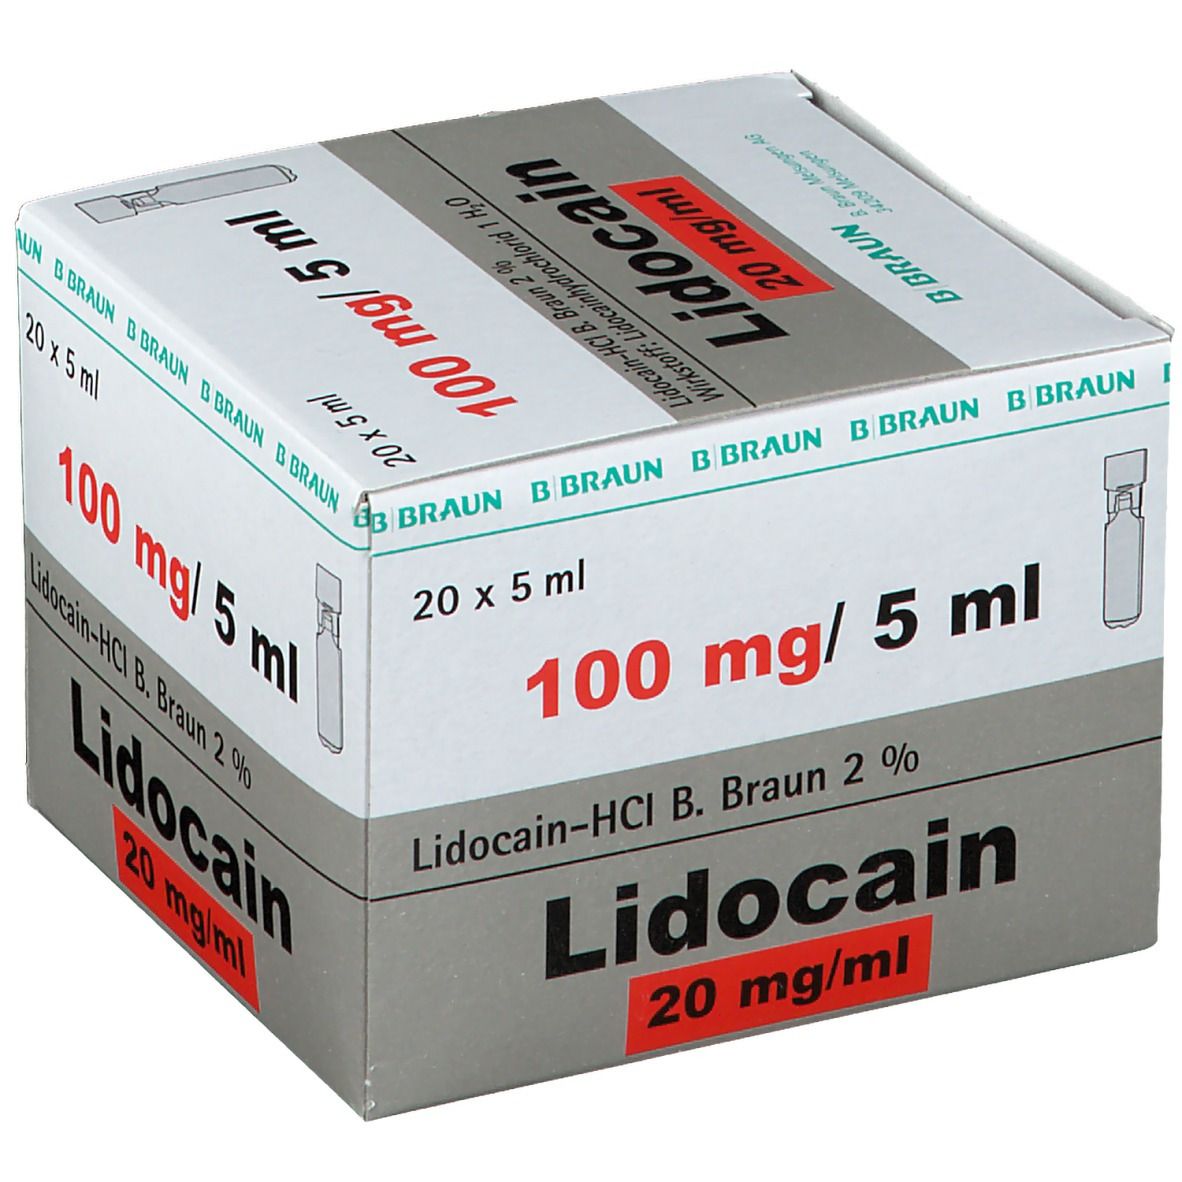 Lidocain-HCl B .Braun 2 %